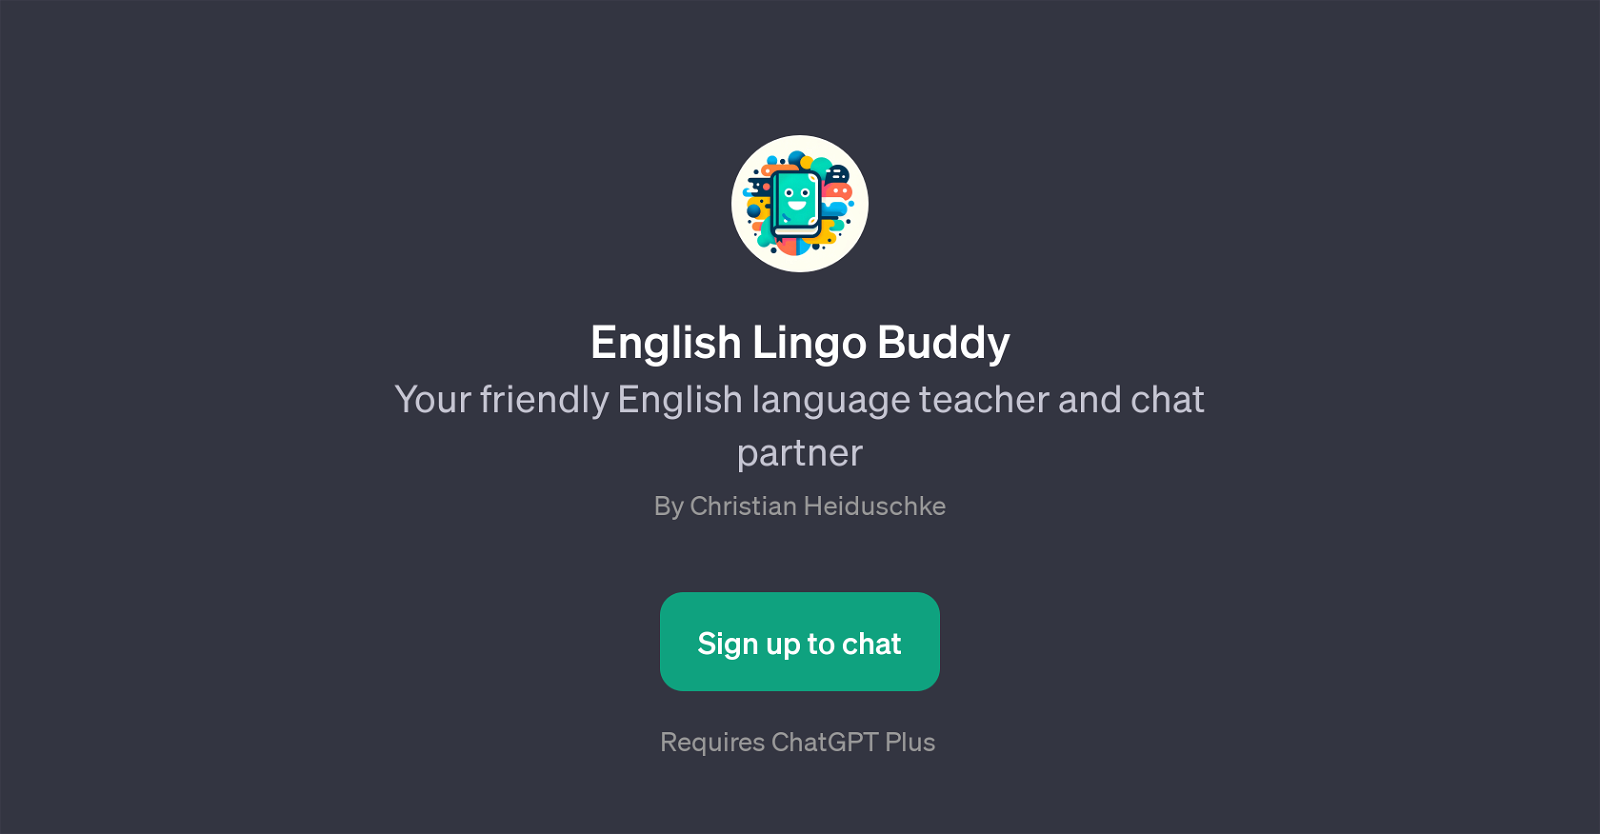 English Lingo Buddy website